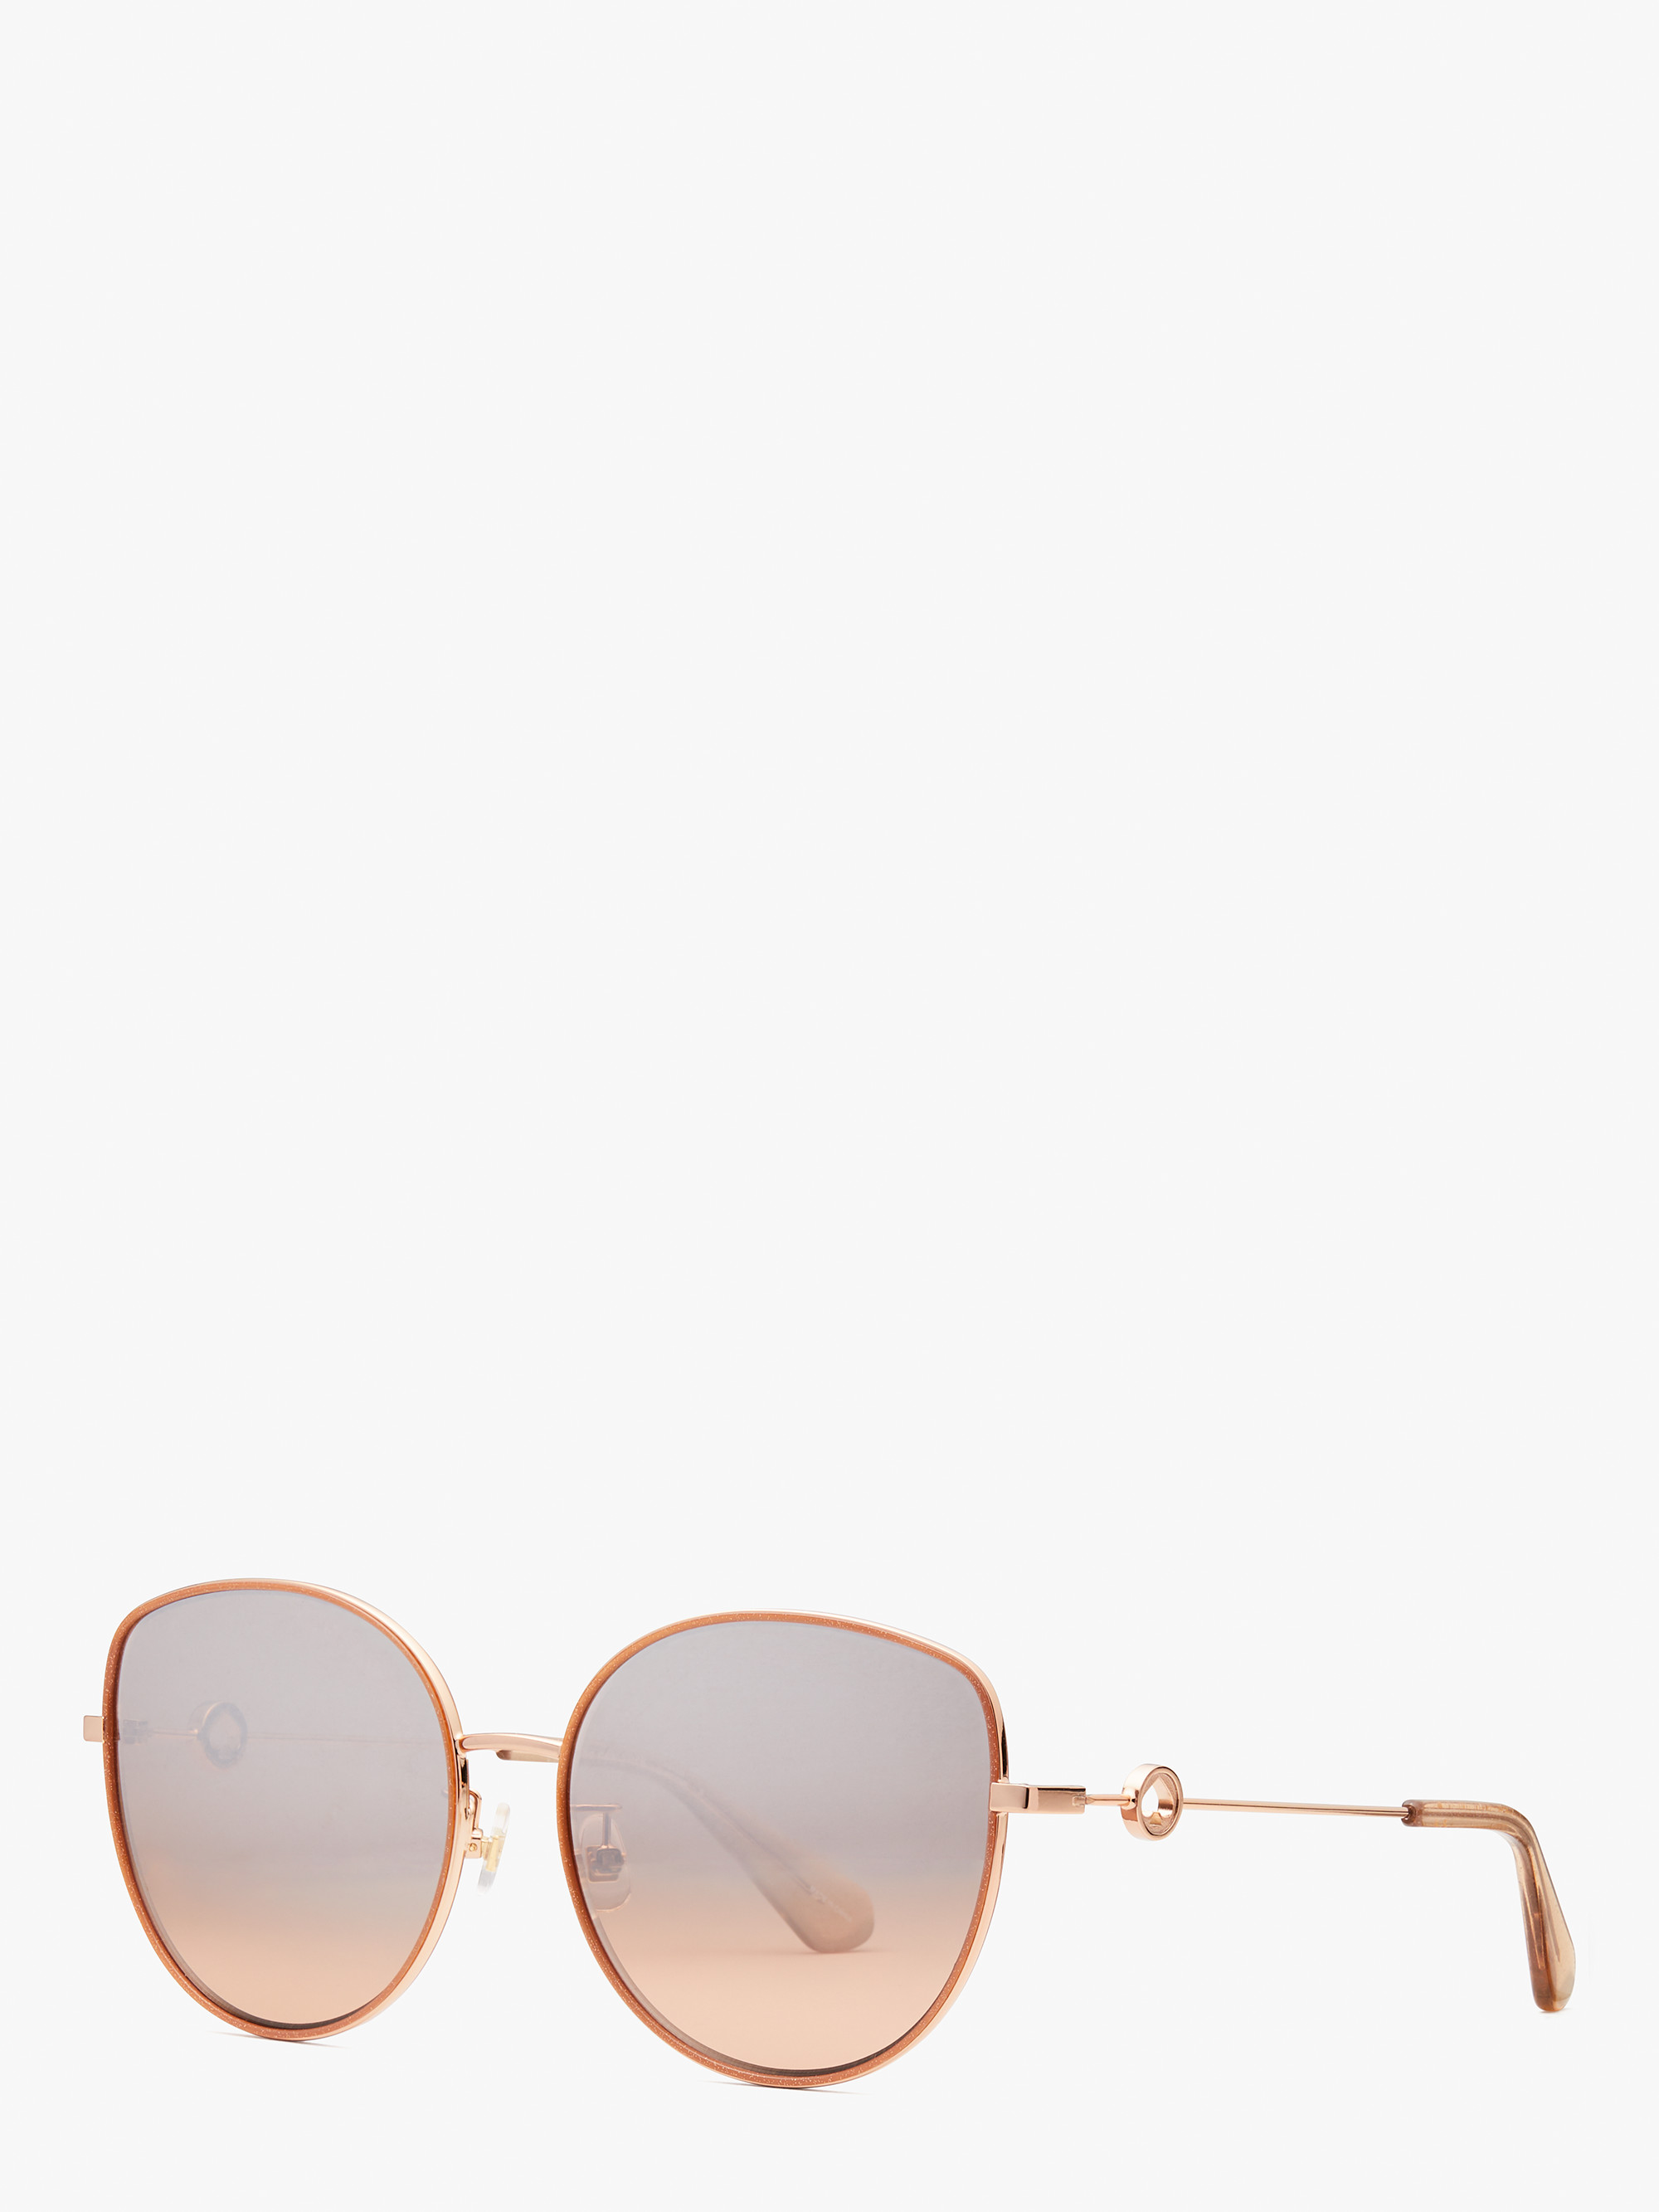 sicilia sunglasses